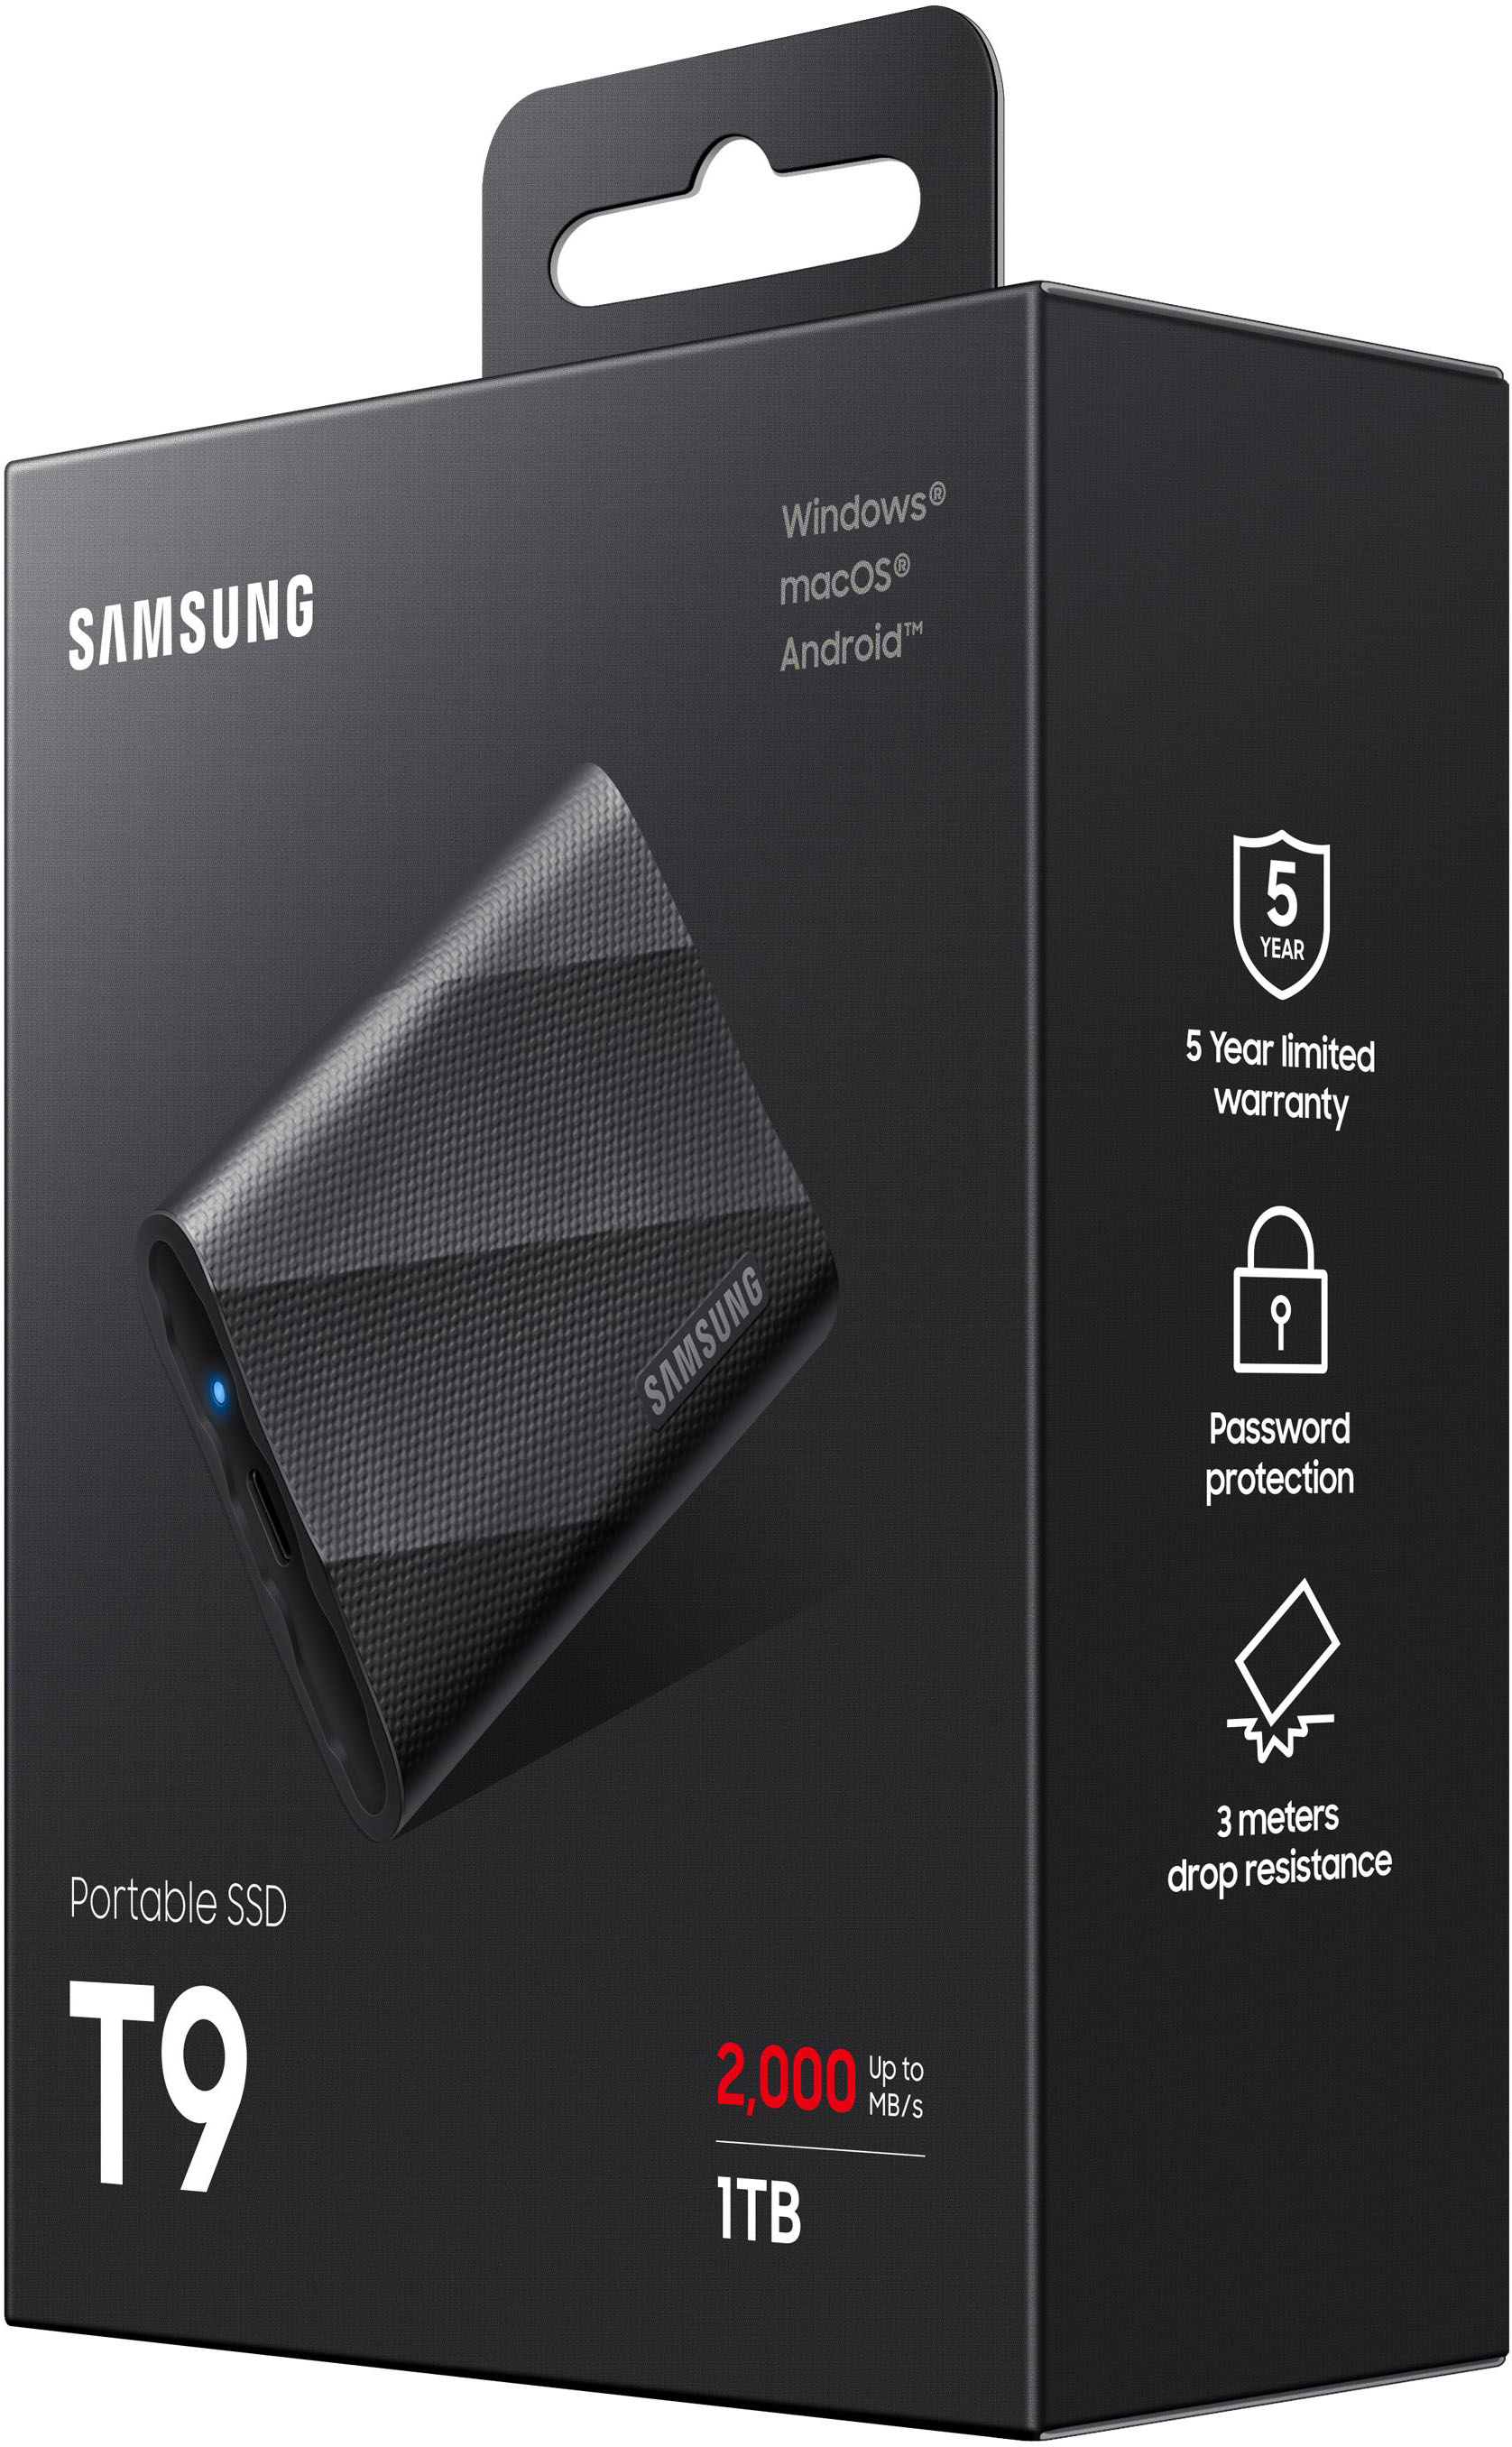 Samsung Announces T9 Portable SSD - Samsung US Newsroom